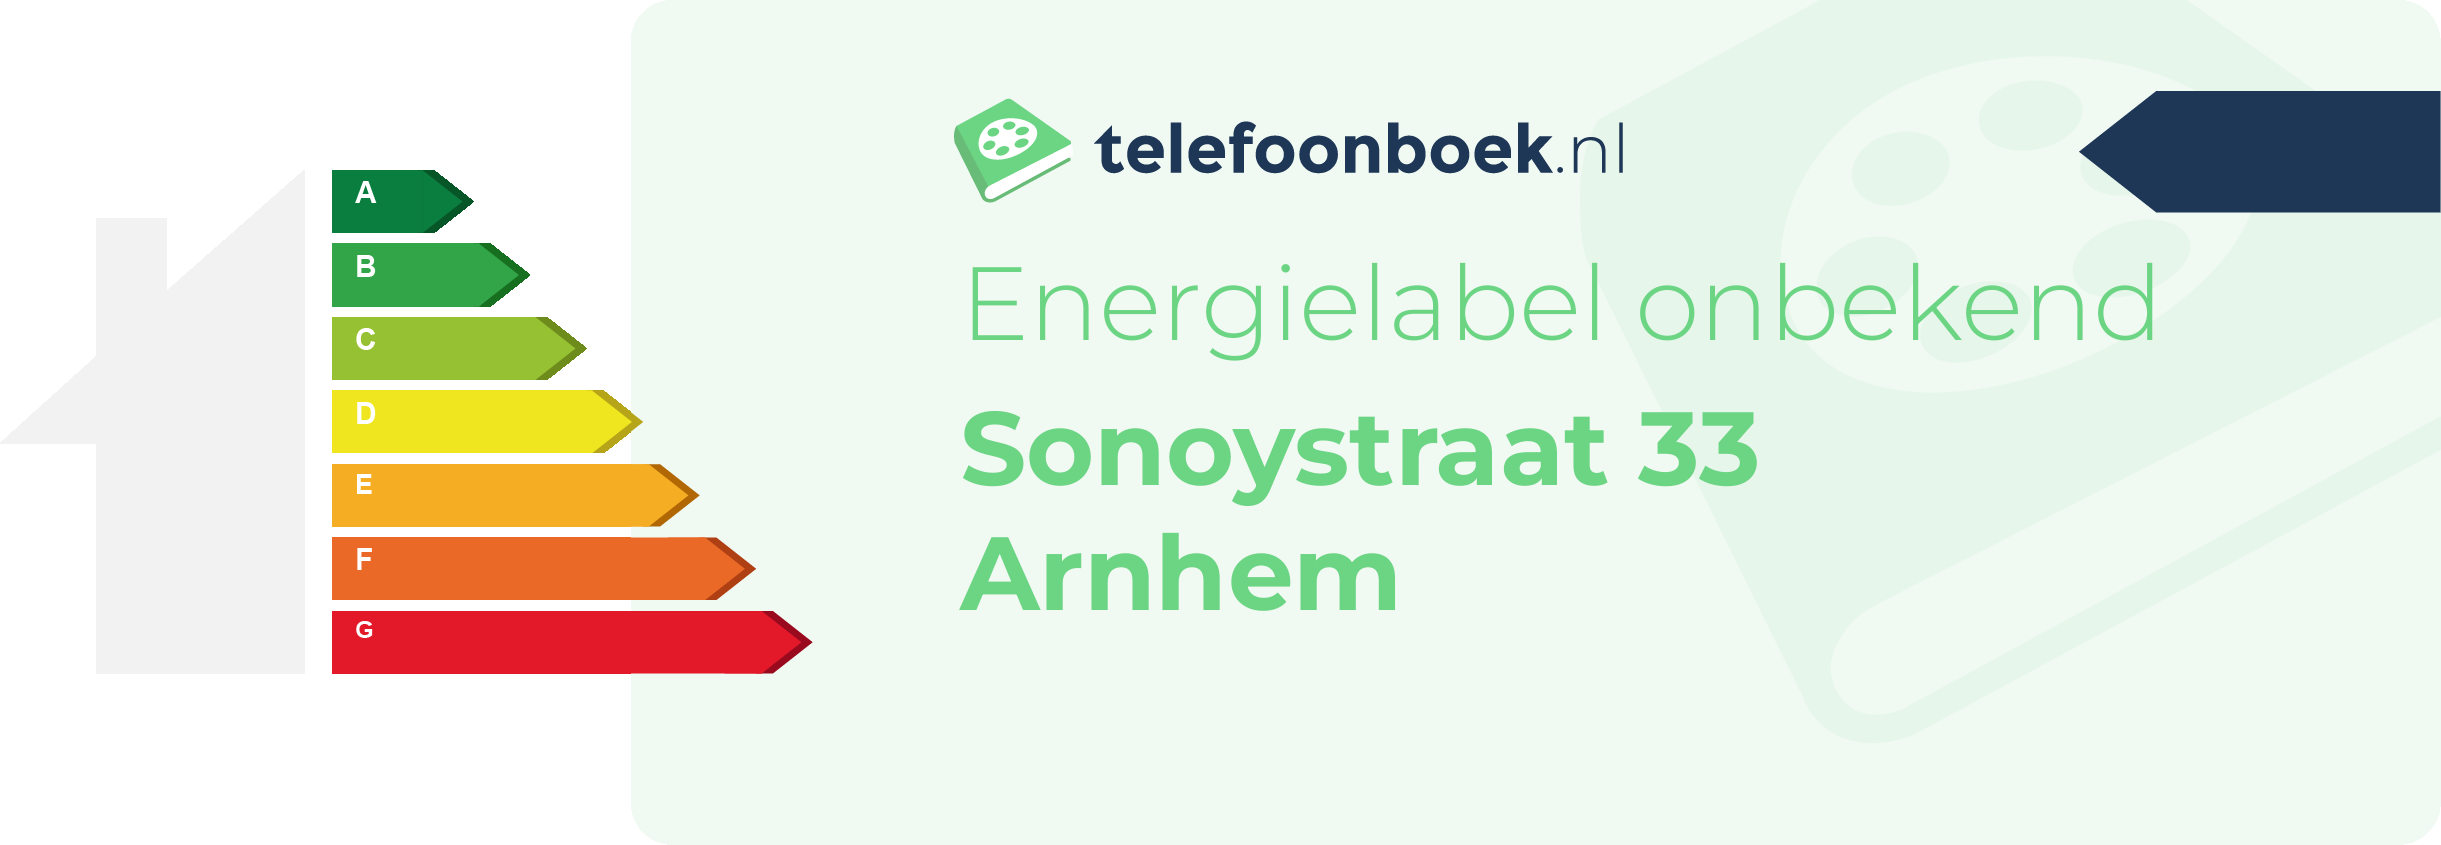 Energielabel Sonoystraat 33 Arnhem